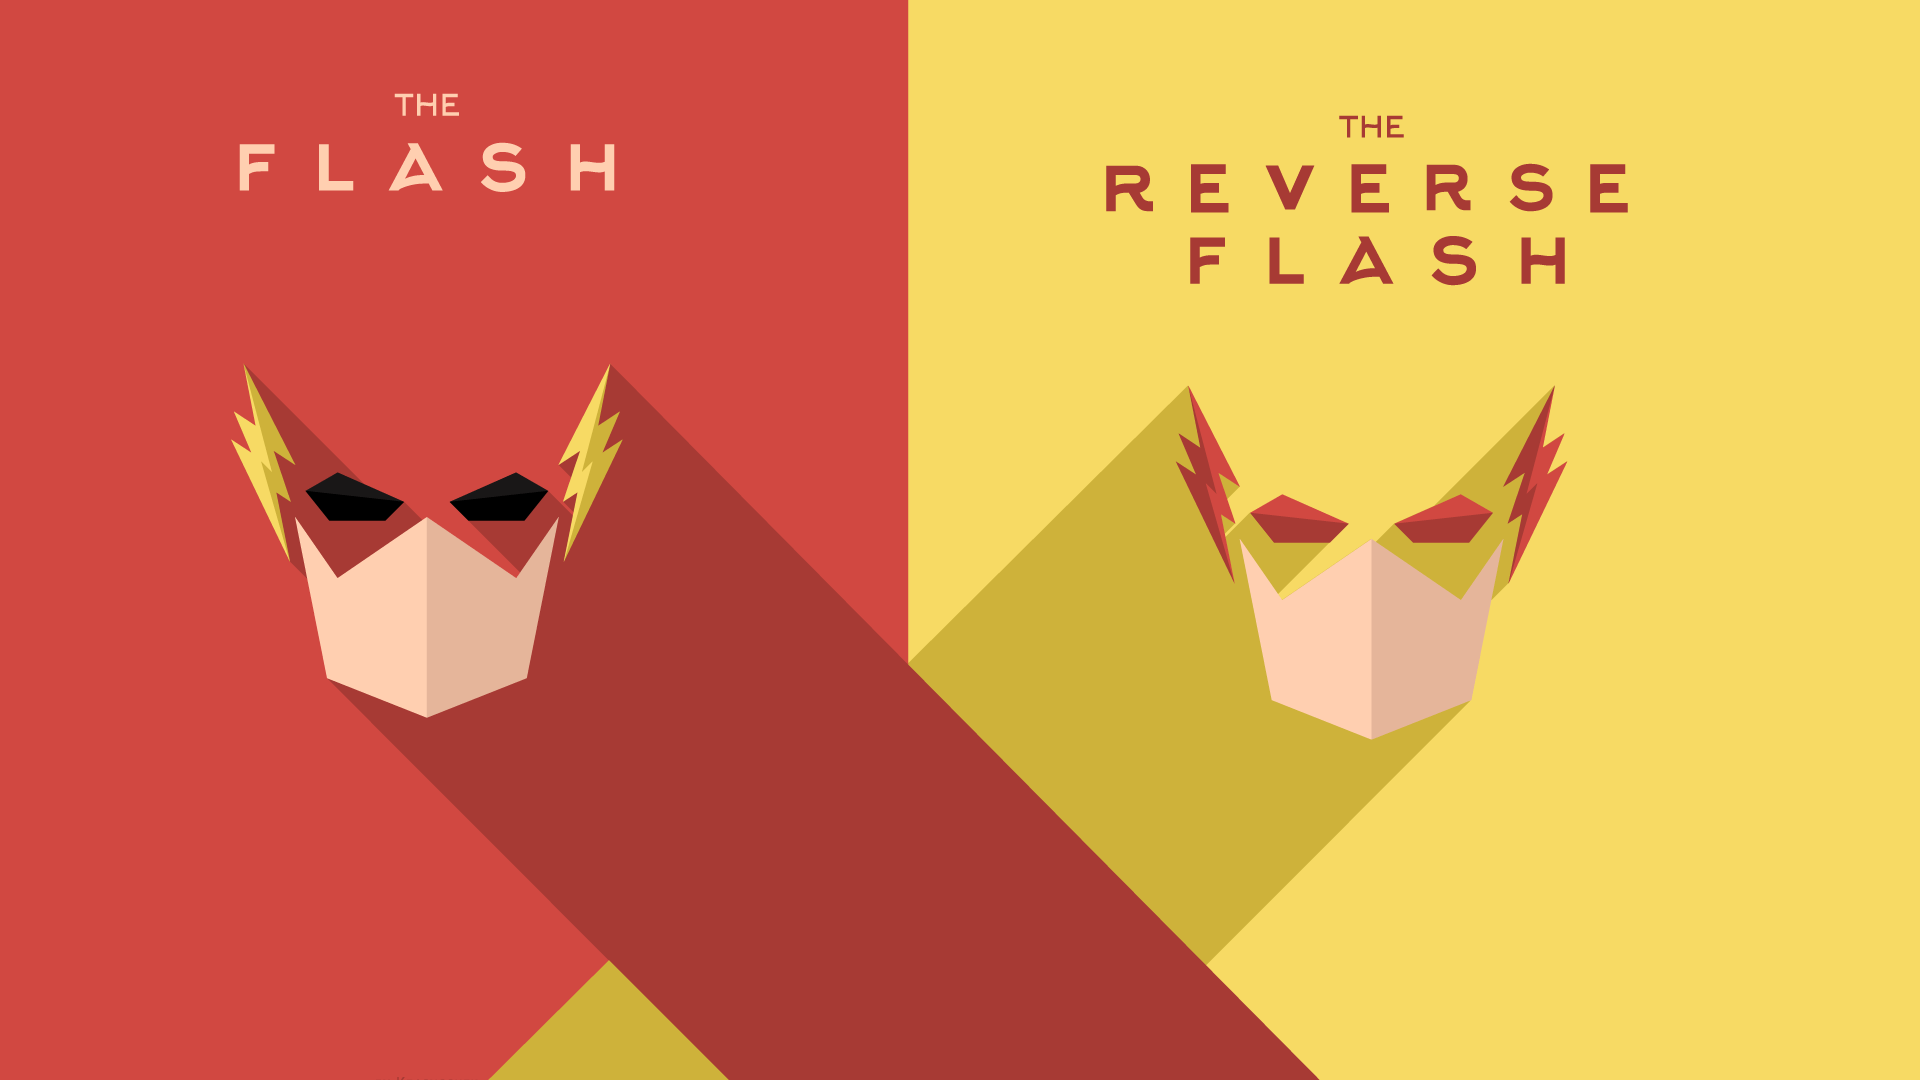 Edited Flash Wallpaper to make Reverse Flash Version!